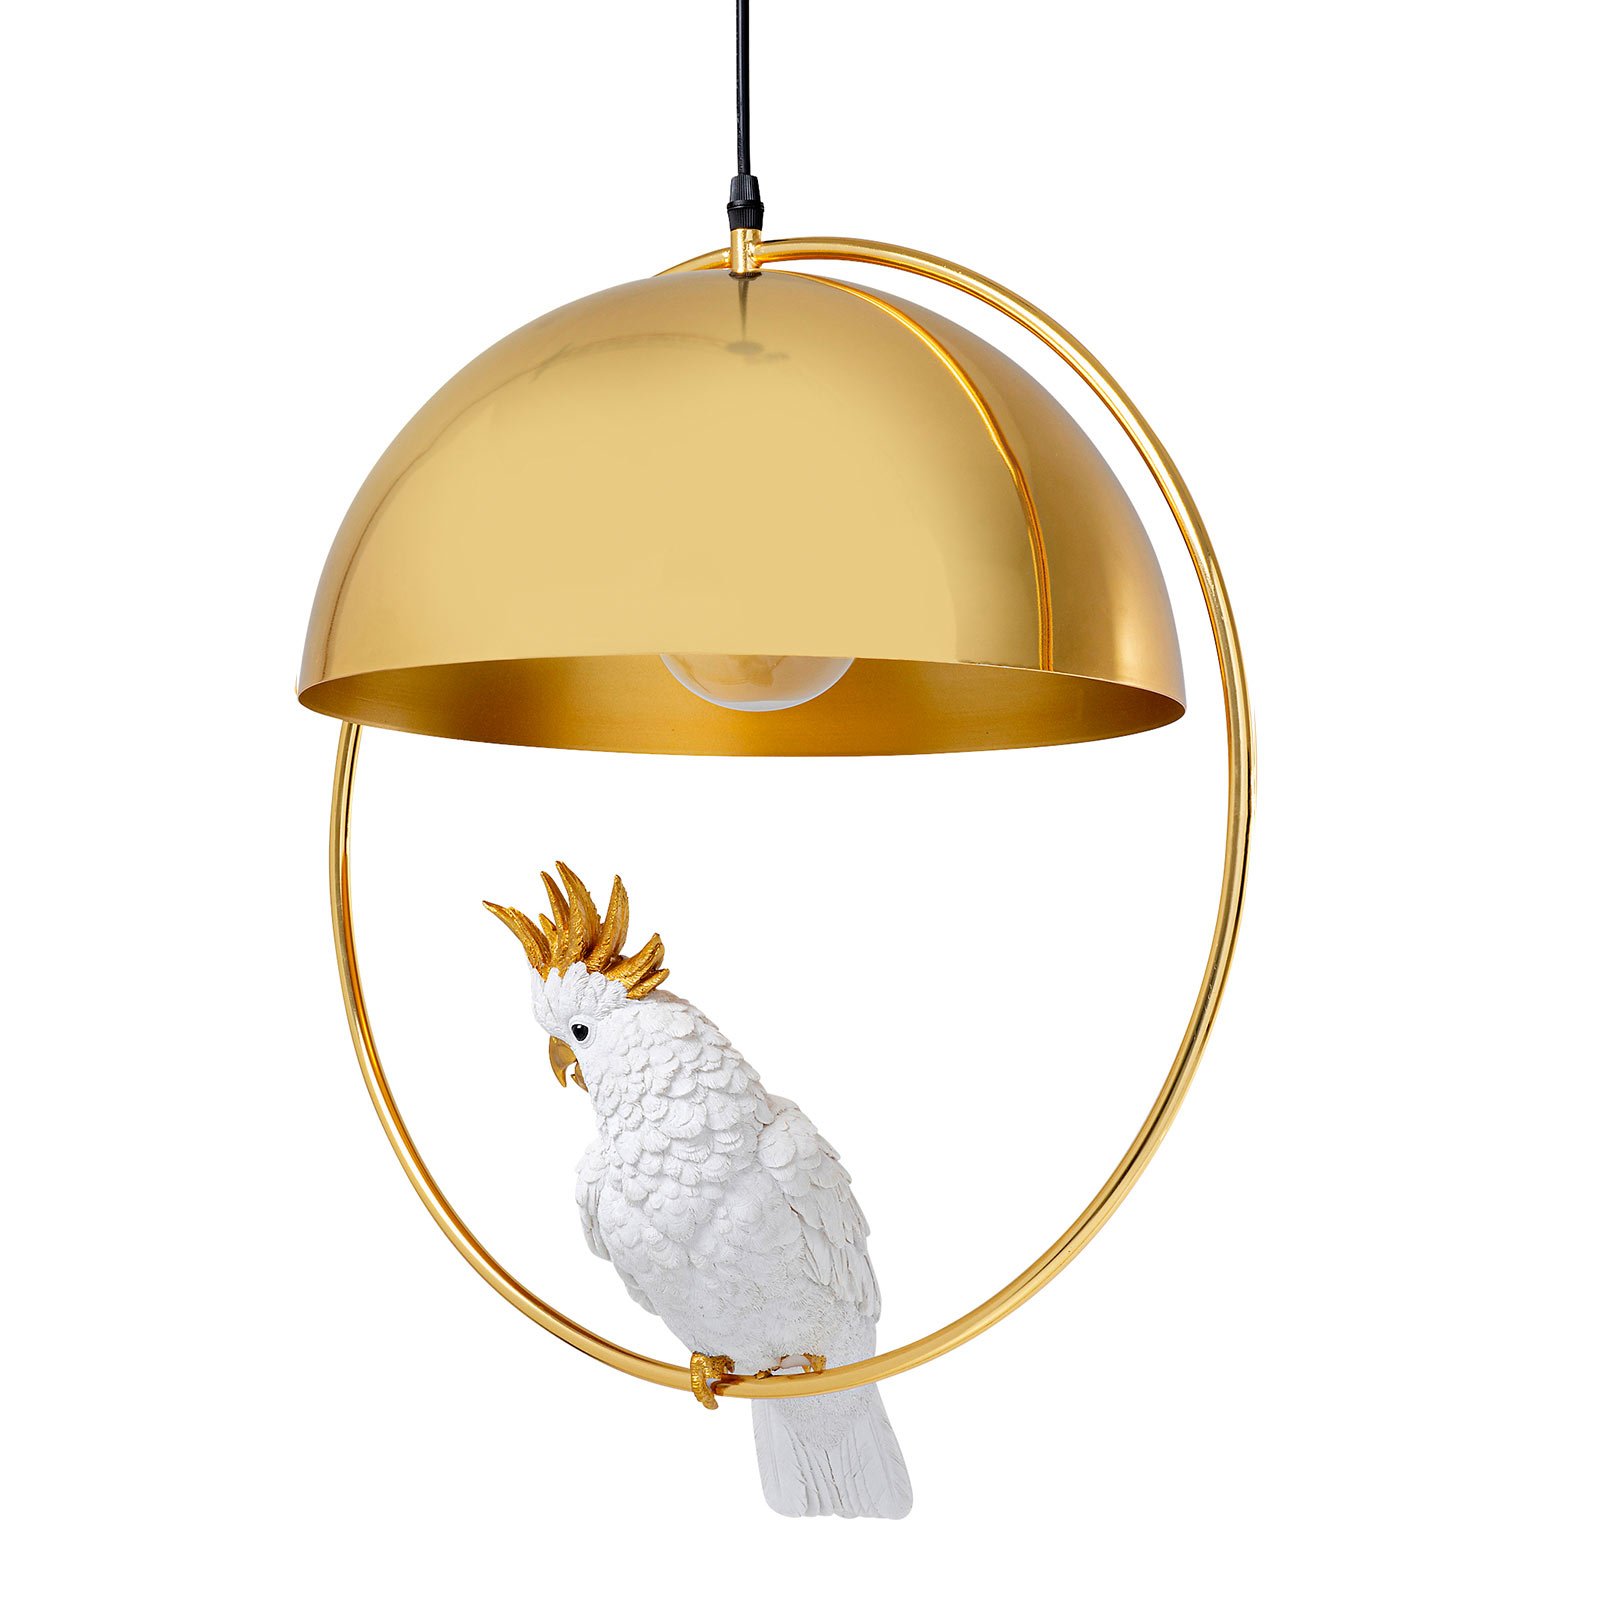 KARE Cockatoo pendant light with cockatoo model